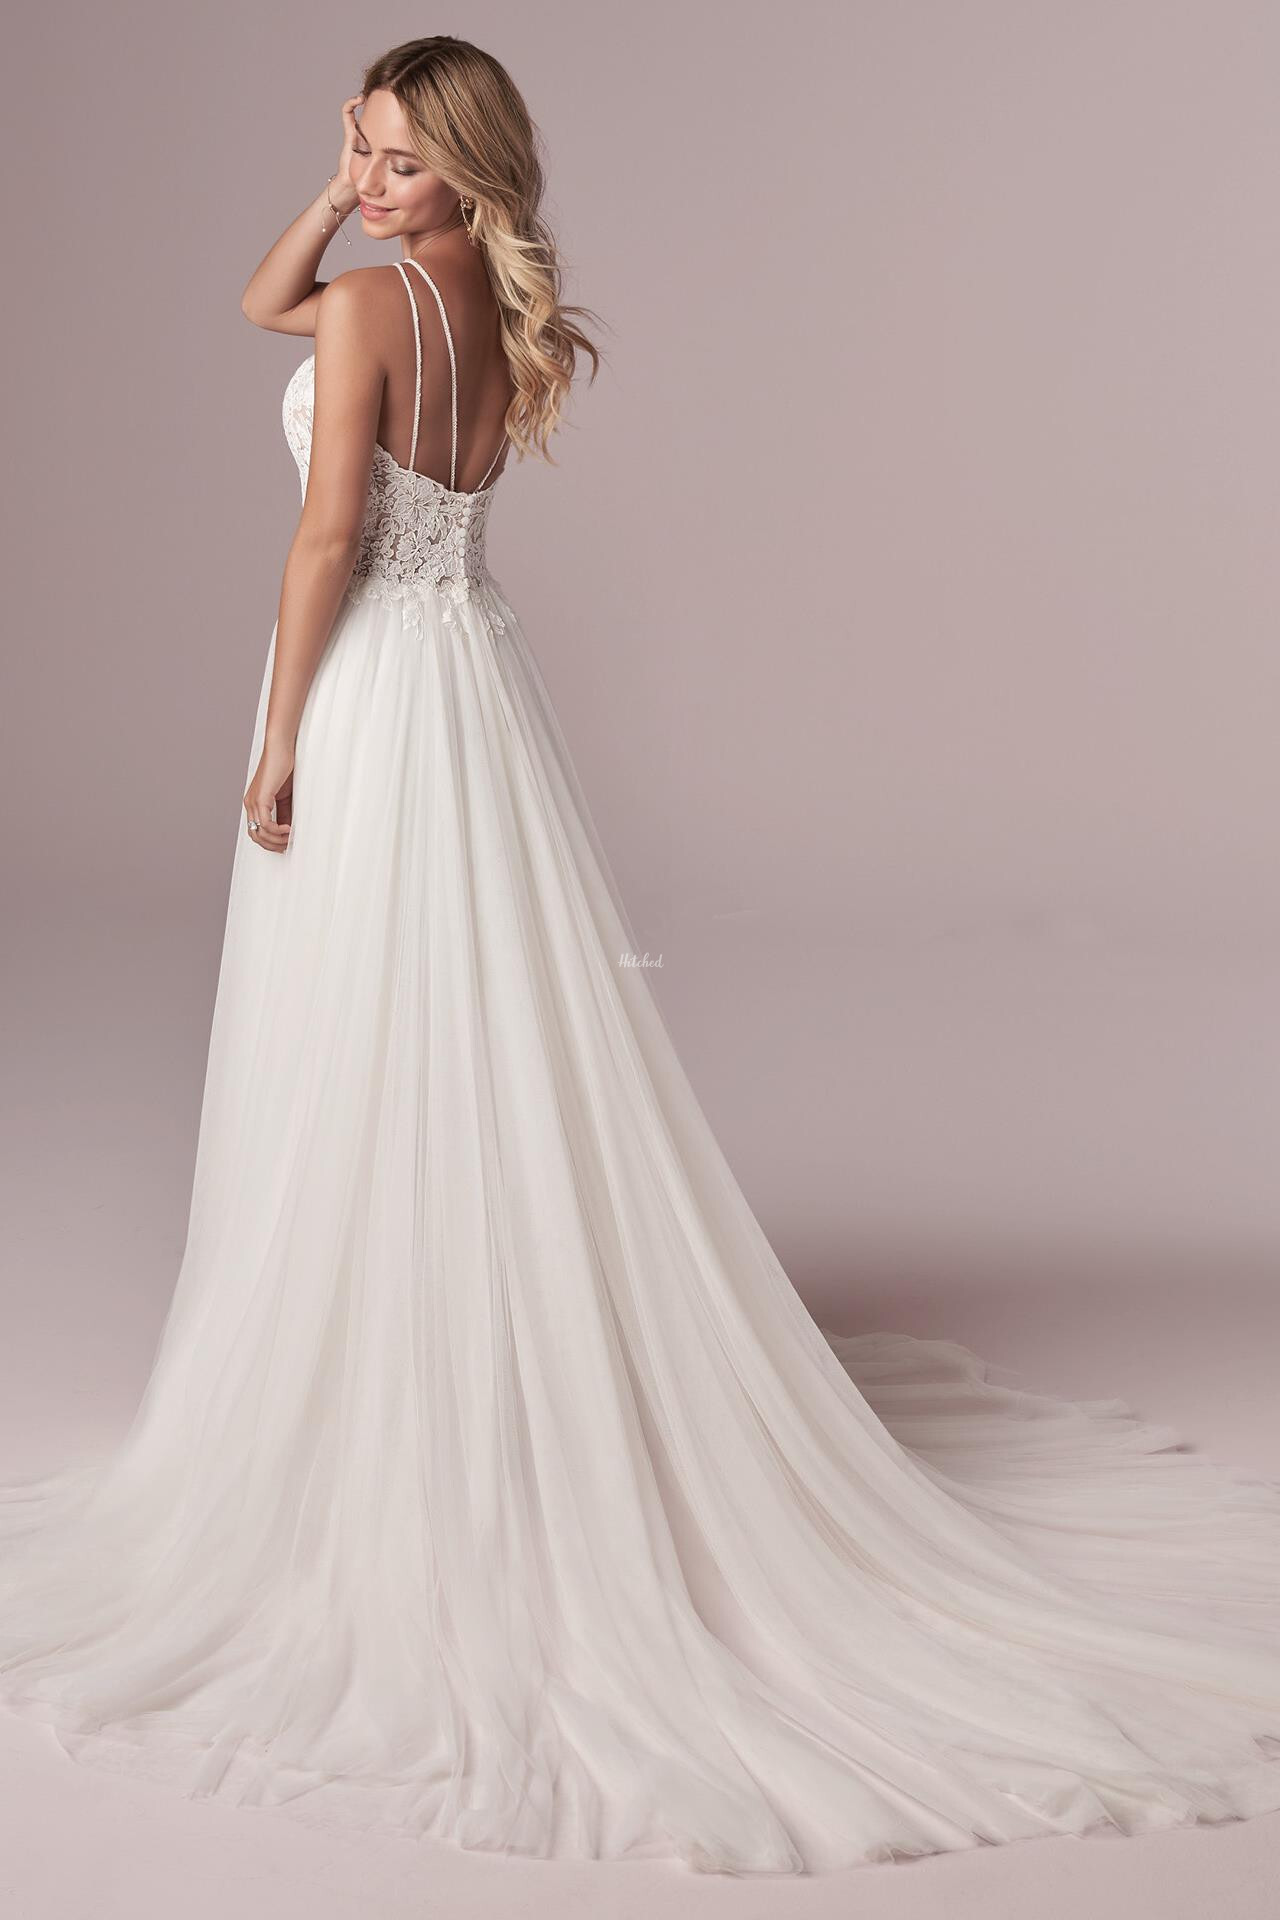 Lexie Wedding Dress from Rebecca Ingram hitched.co.uk